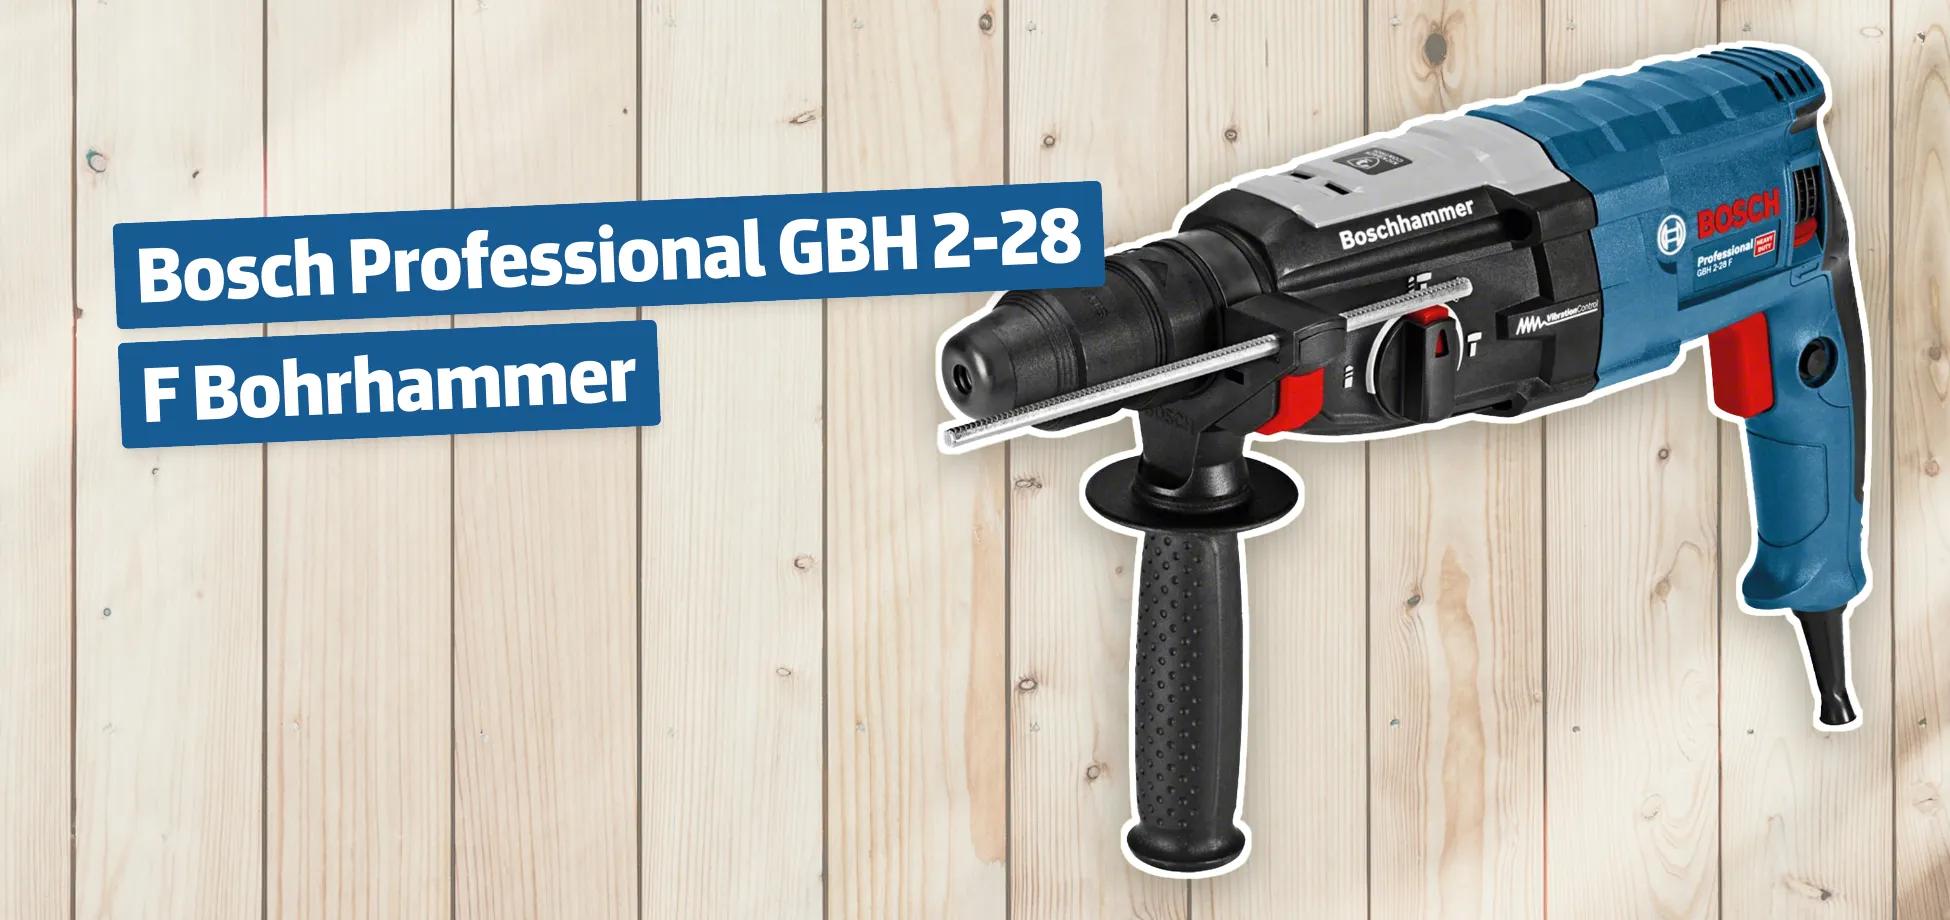 Bosch Professional GBH 2-28 F Bohrhammer